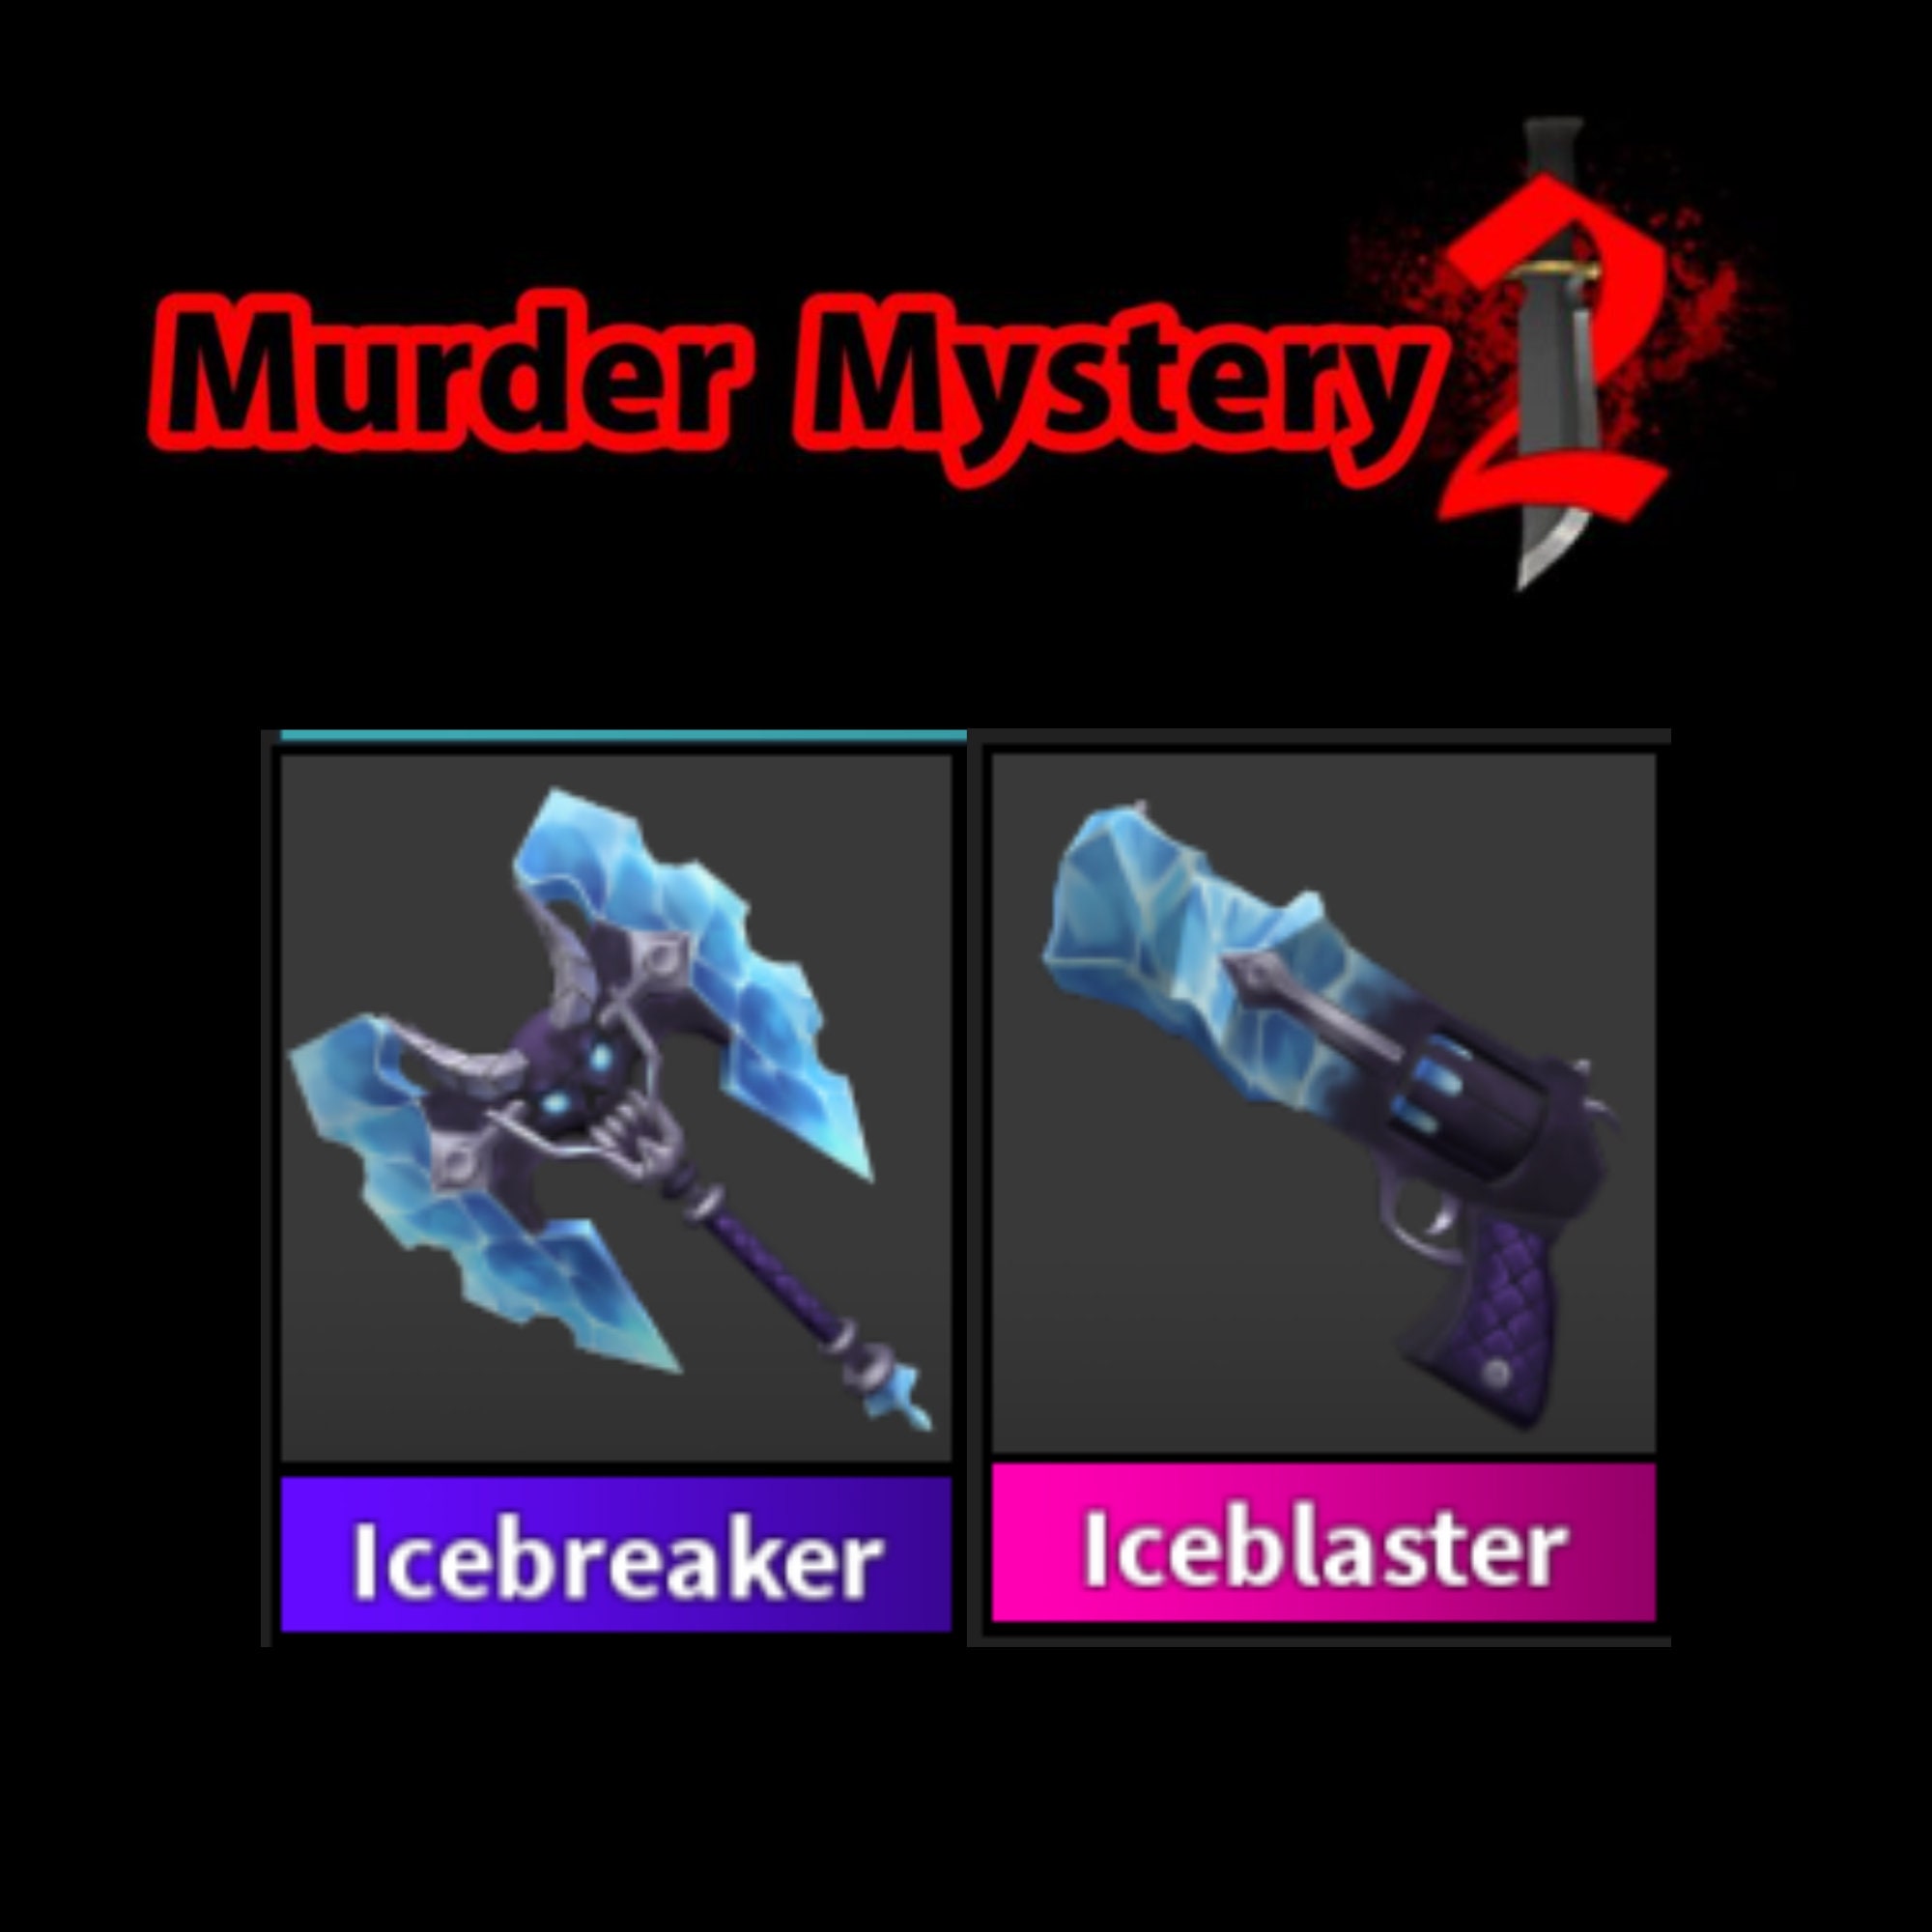 Roblox Murder Mystery 2 Mm2 godlys ICE BLASTER 